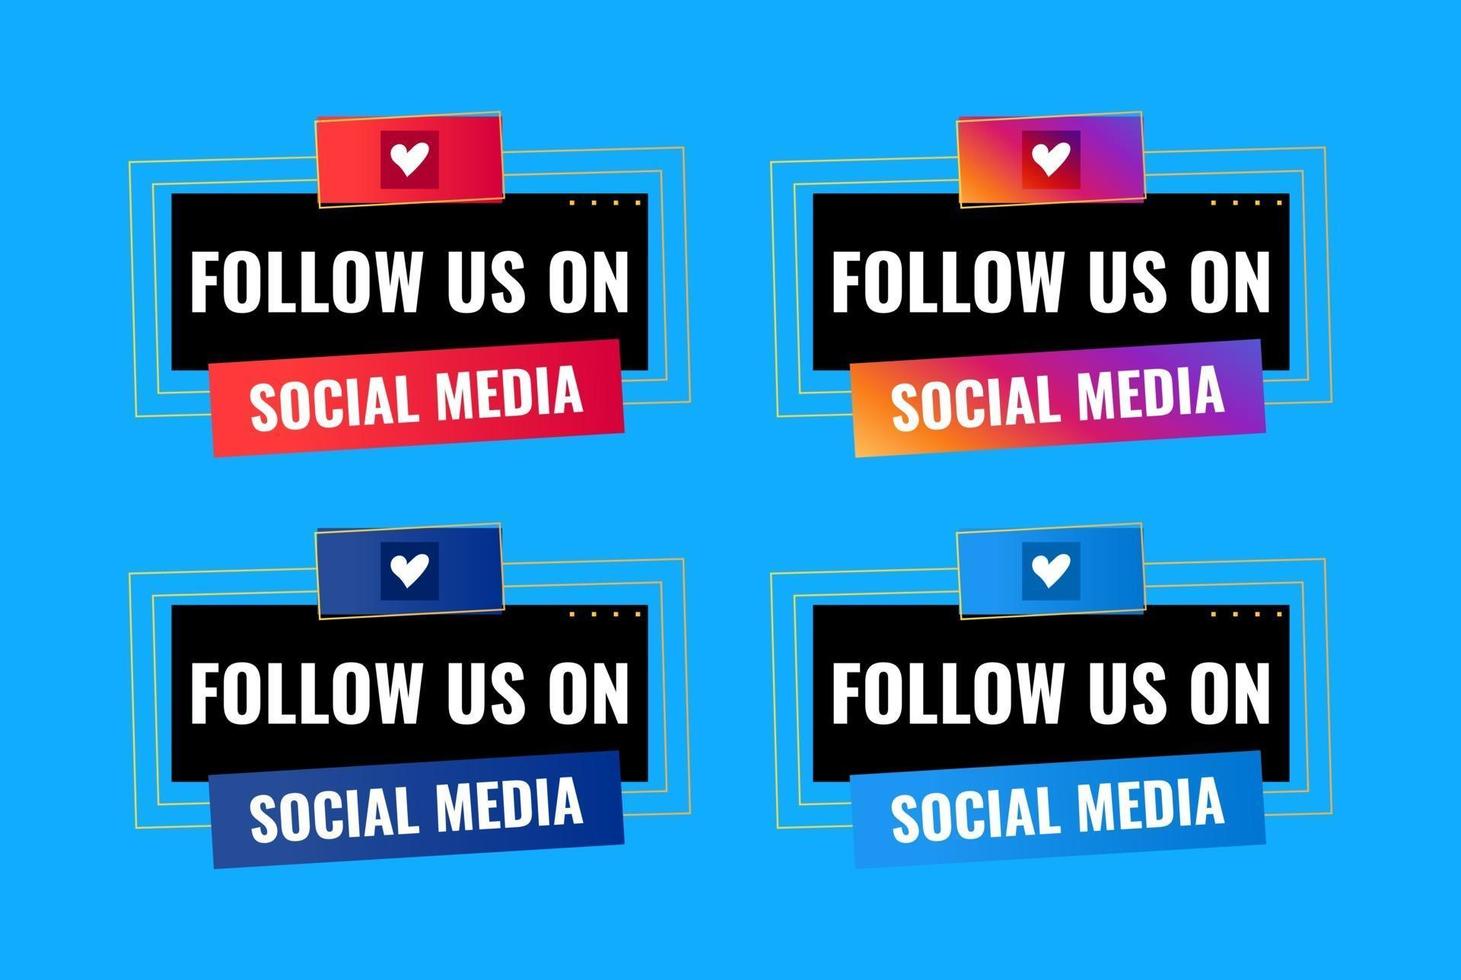 Följ oss på social media firande banner design vektor